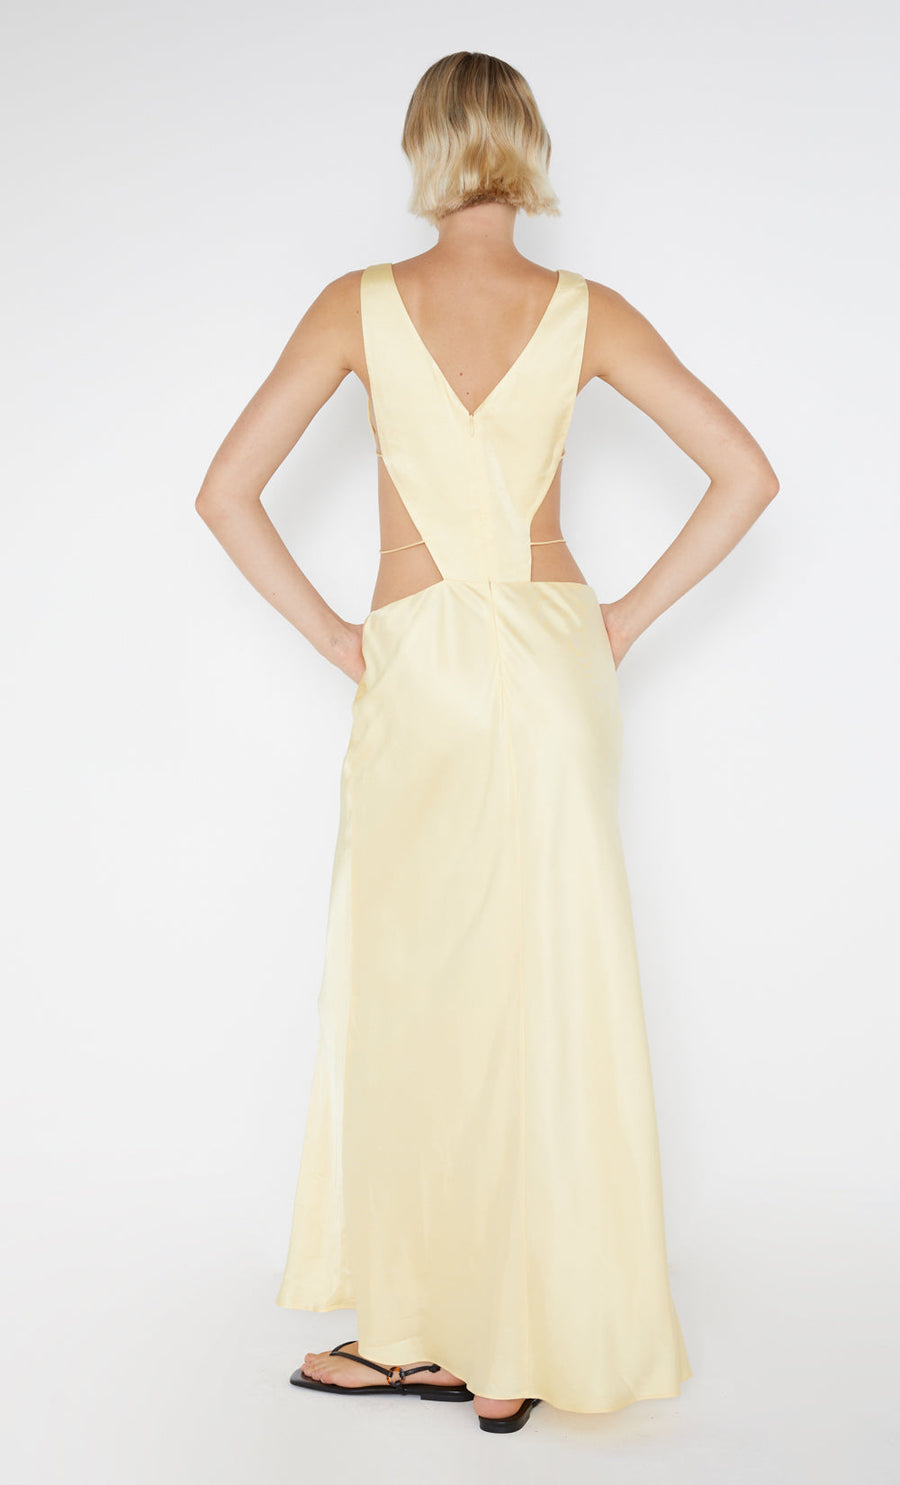 Bec + Bridge - Agathe Diamond Dress in Butter Yellow